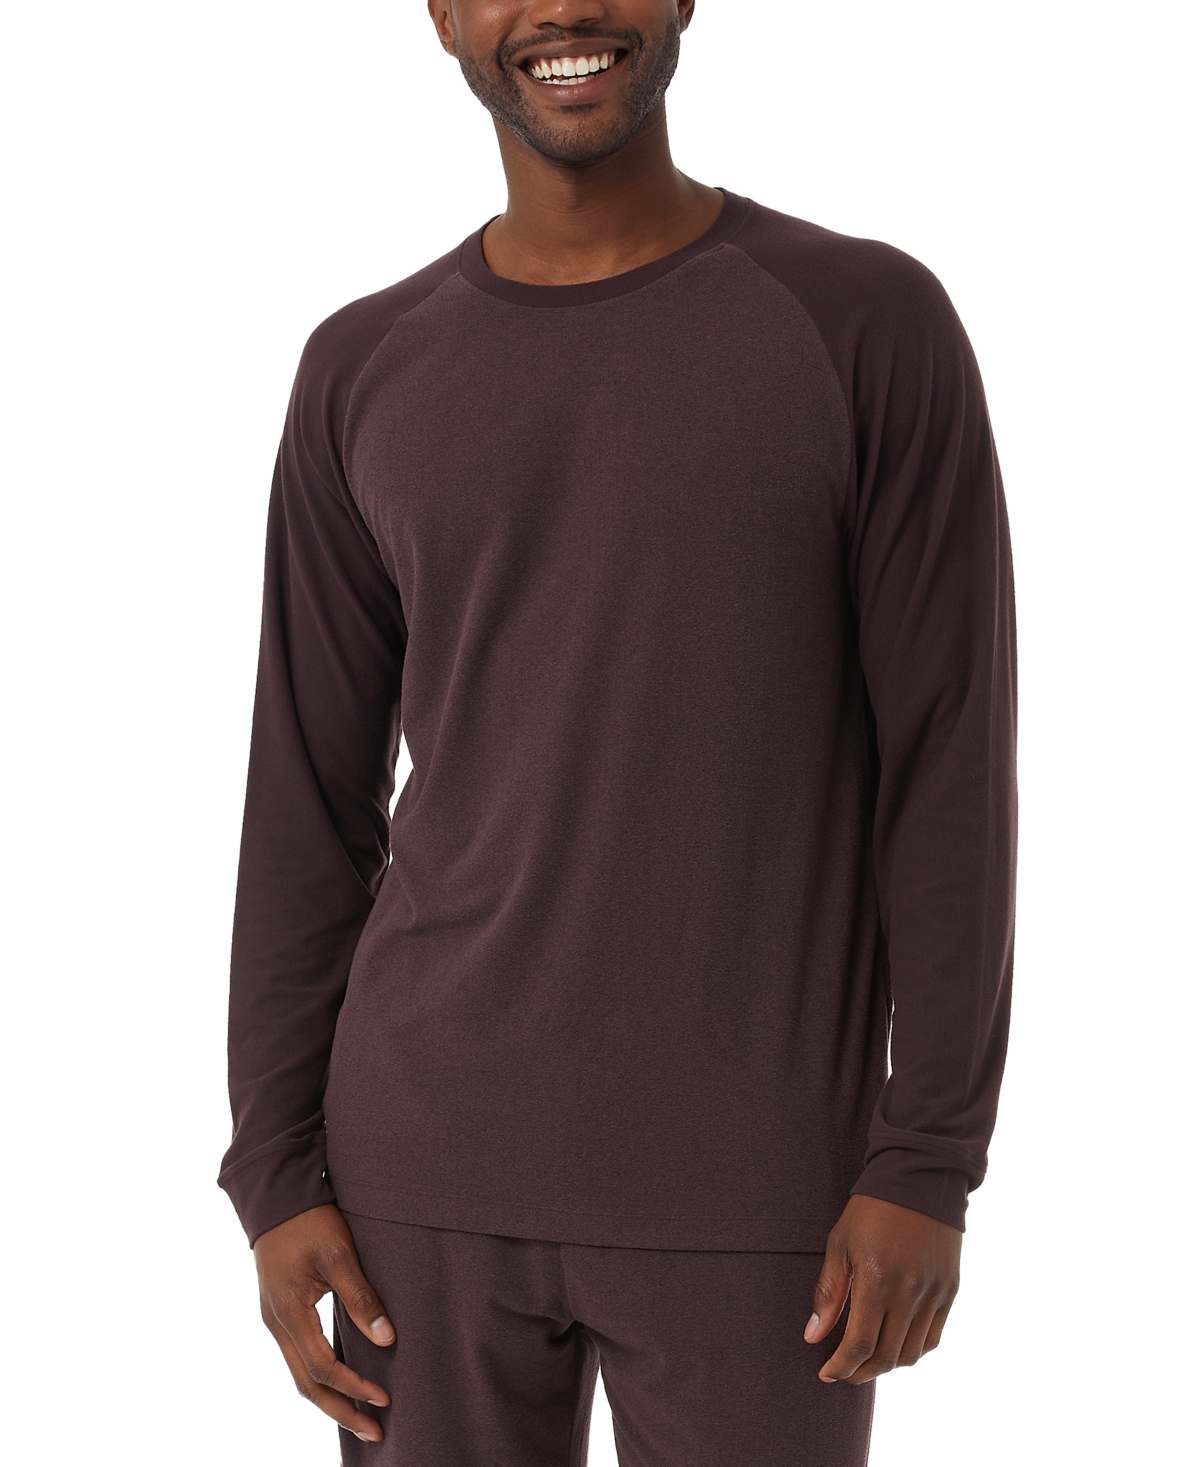 Men's Heat Colorblocked Raglan-Sleeve Sleep T-Shirt - Htrichplum